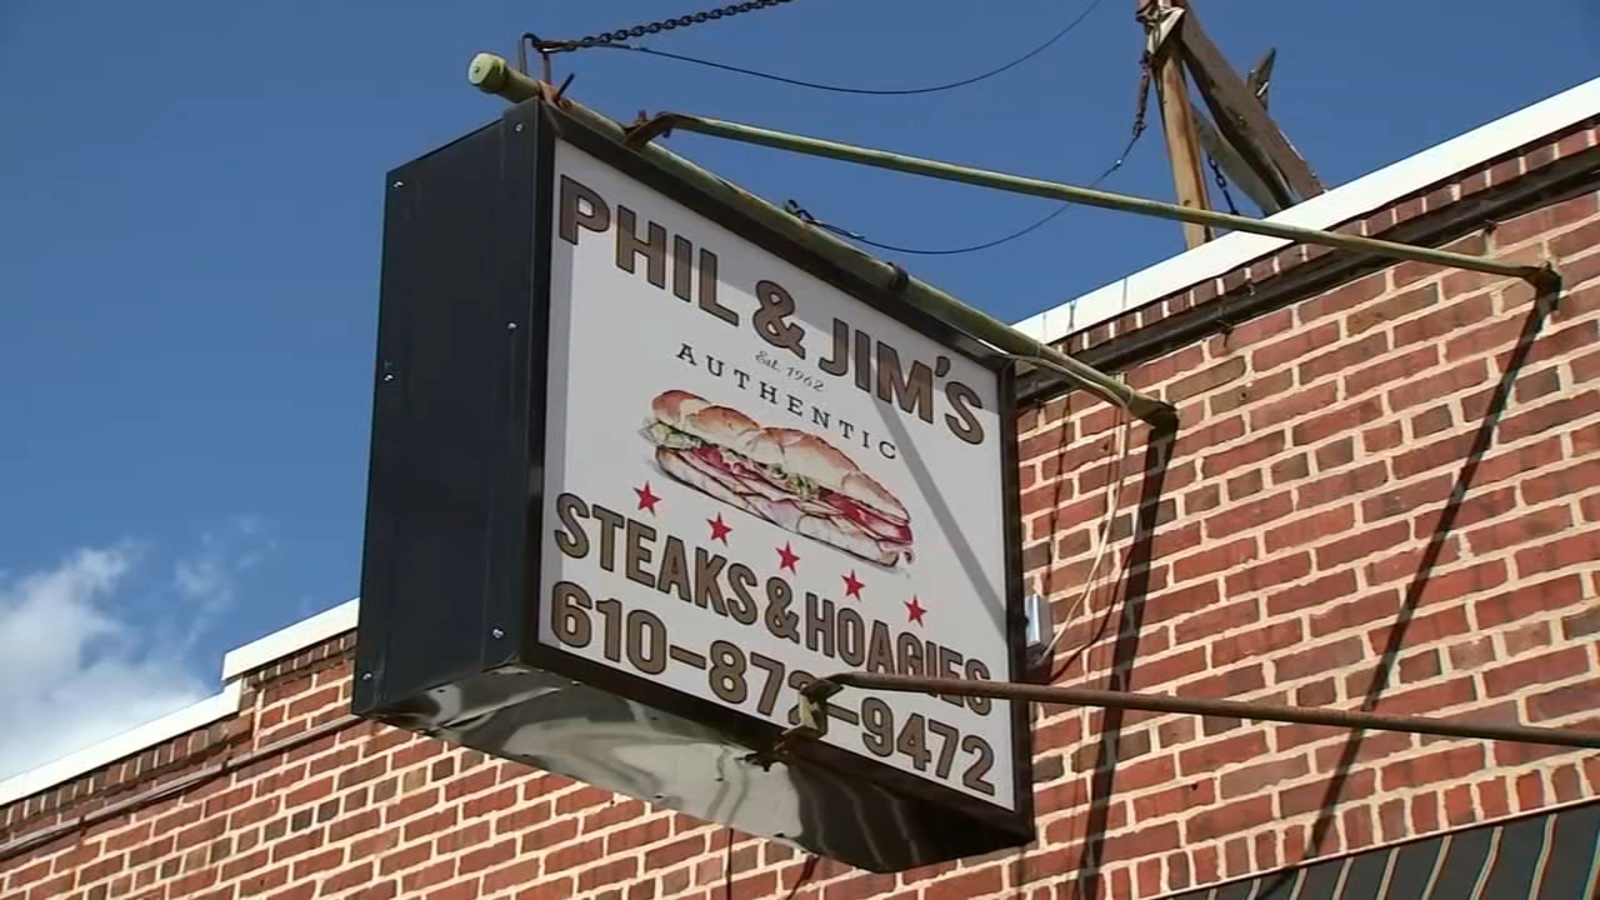   
																Delco steak shop Phil & Jim's wins 'Best Hoagie on Earth' 
															 